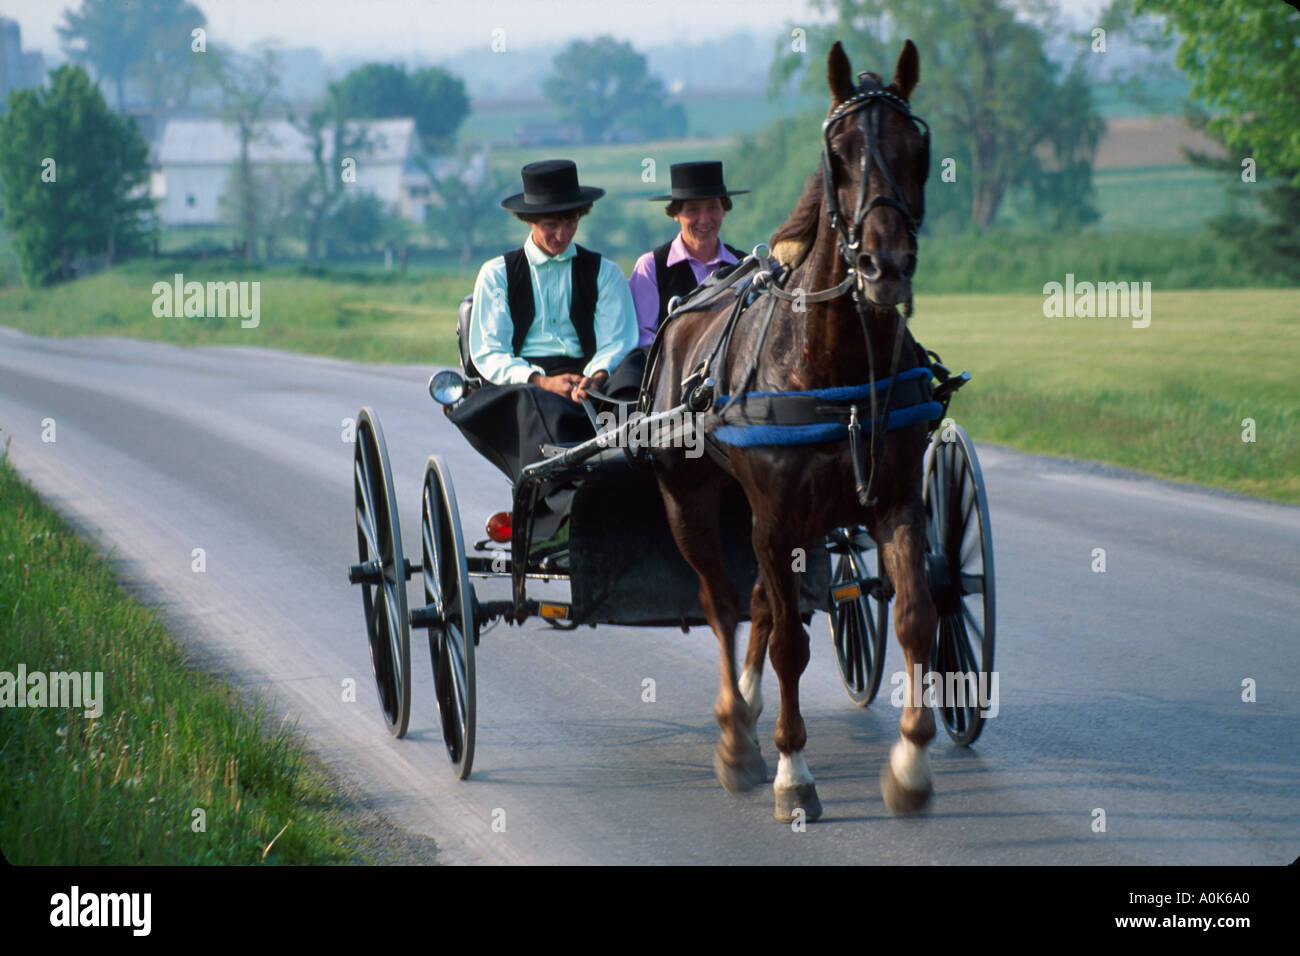 Pennsylvania Strasburg Amish Dutch Mennonite,teen teens teenager teenagers youths,ride riding horse-drawn buggy wagon,transportation country rural roa Stock Photo